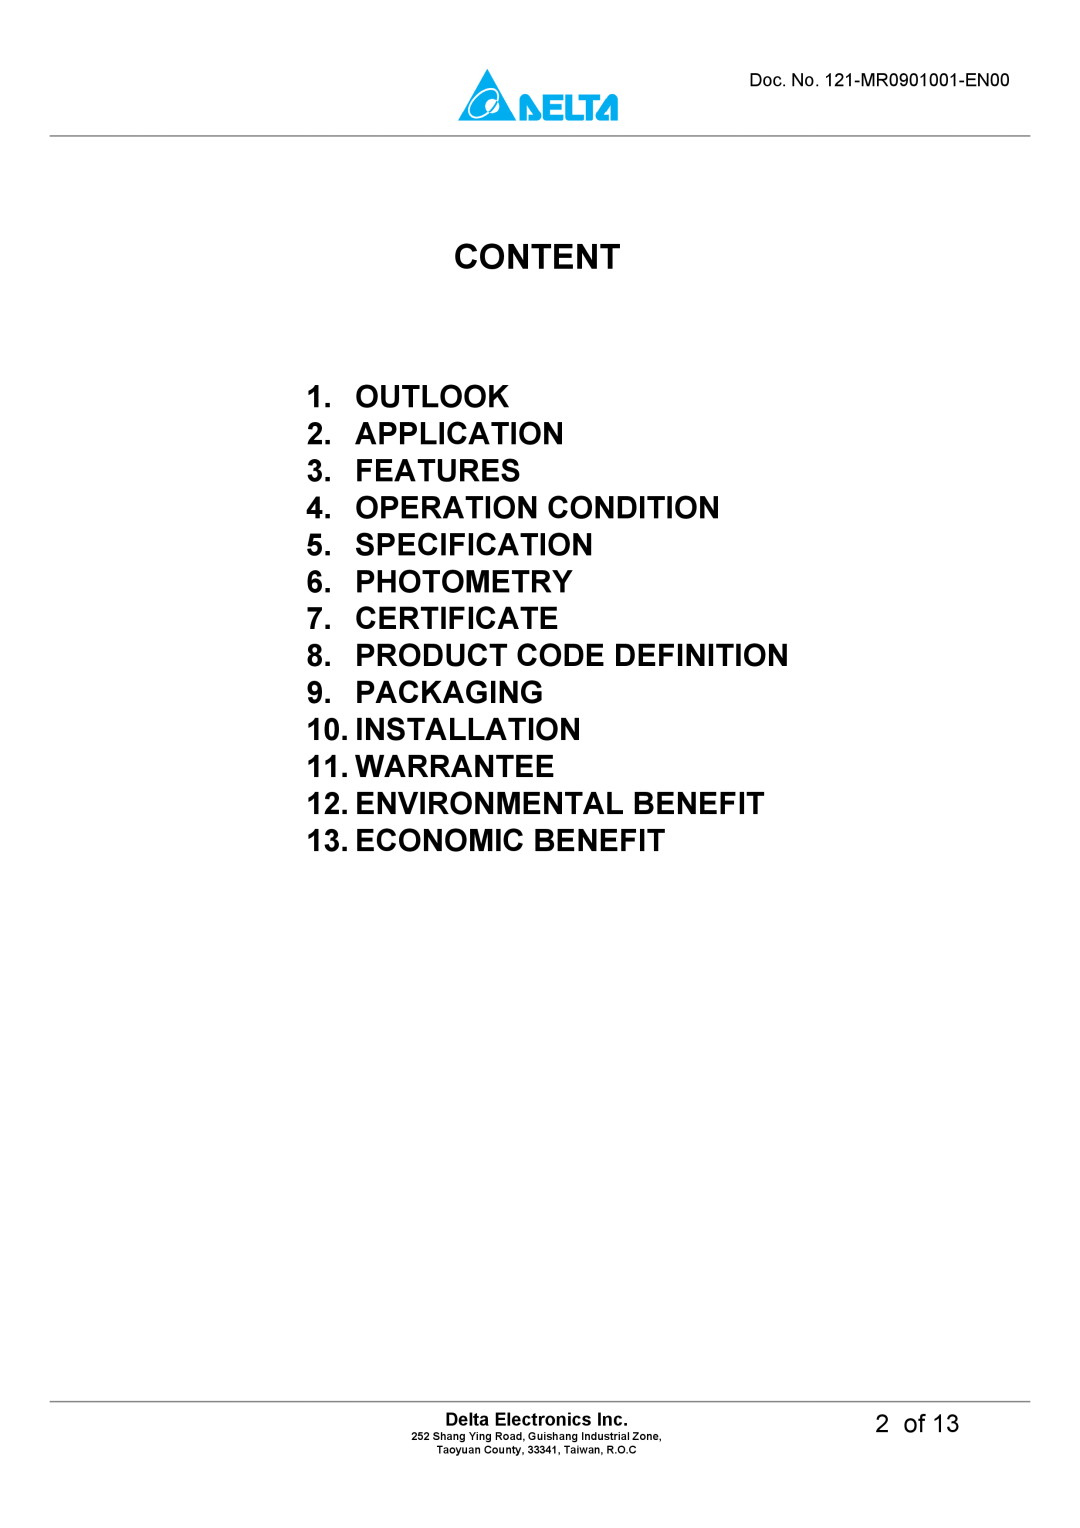 Delta Electronics M6DT-03LB manual Content, 2 of, Delta Electronics Inc, OUTLOOK 2.APPLICATION 3.FEATURES 